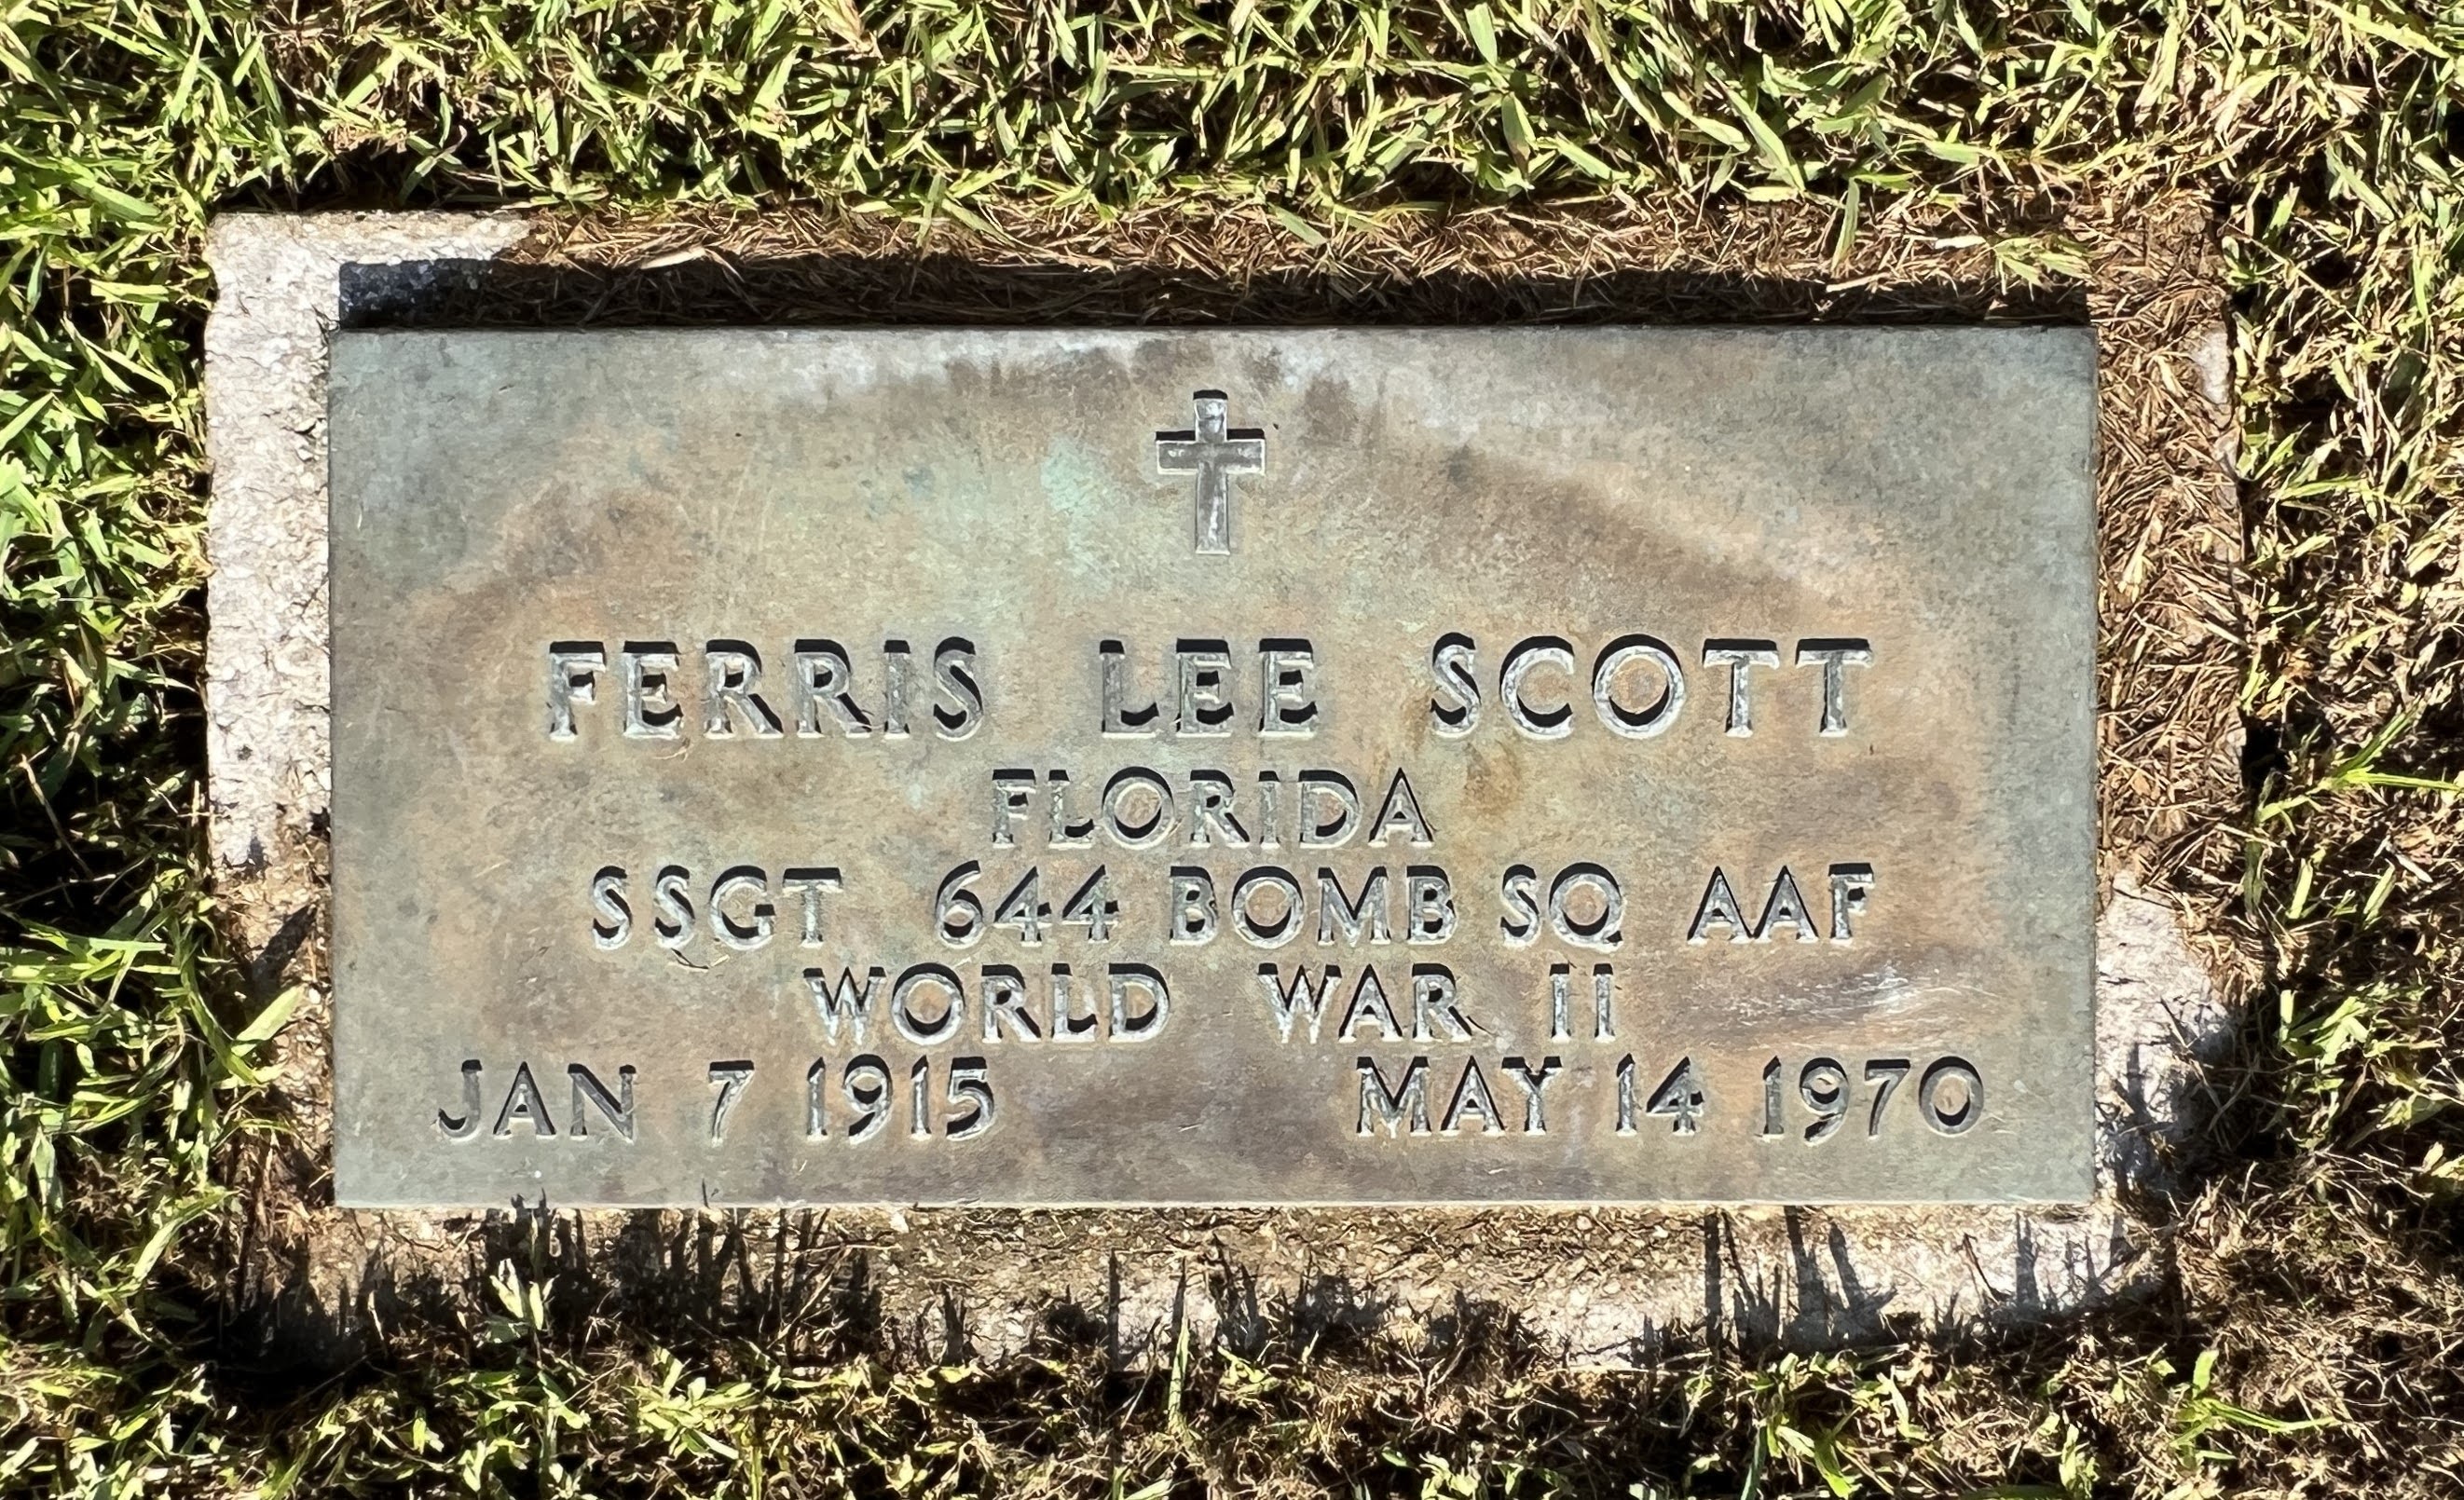 Sgt Ferris Lee Scott